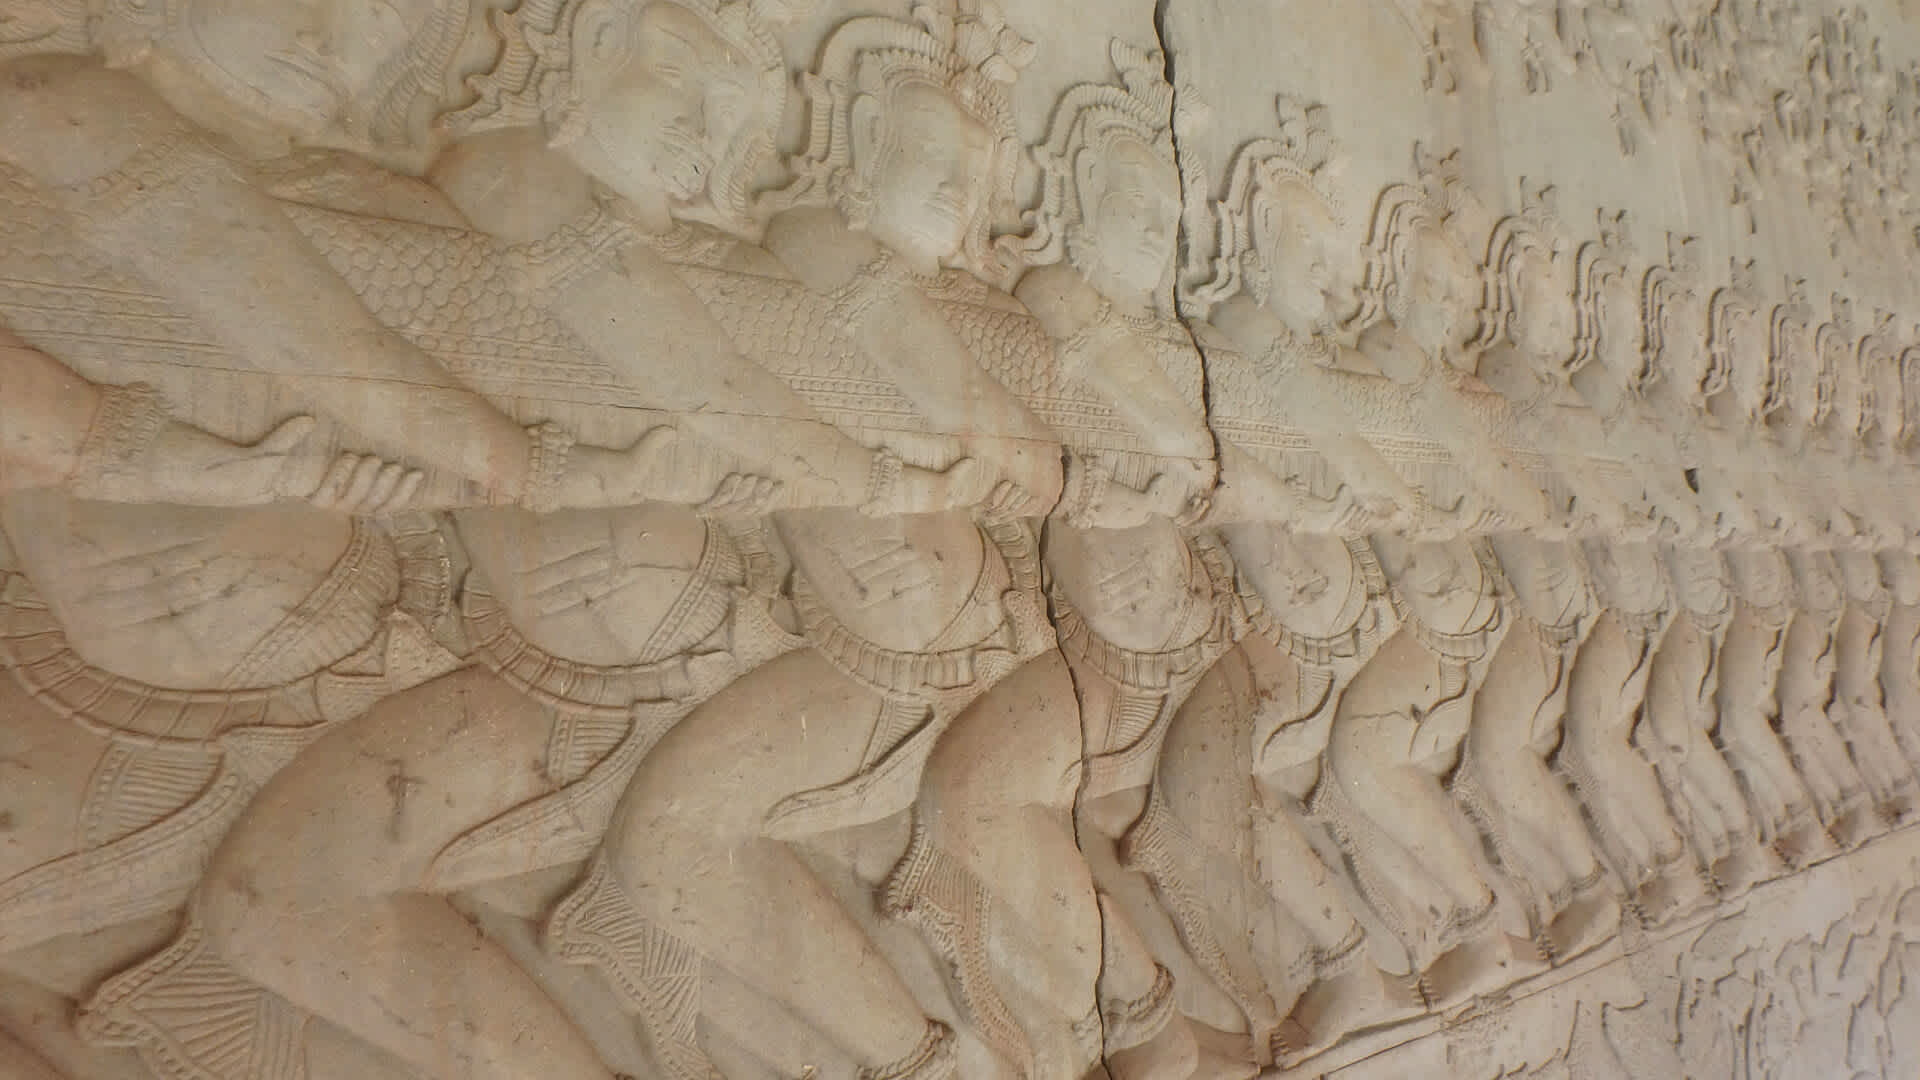 Detailed wall carvings within Angkor Wat.